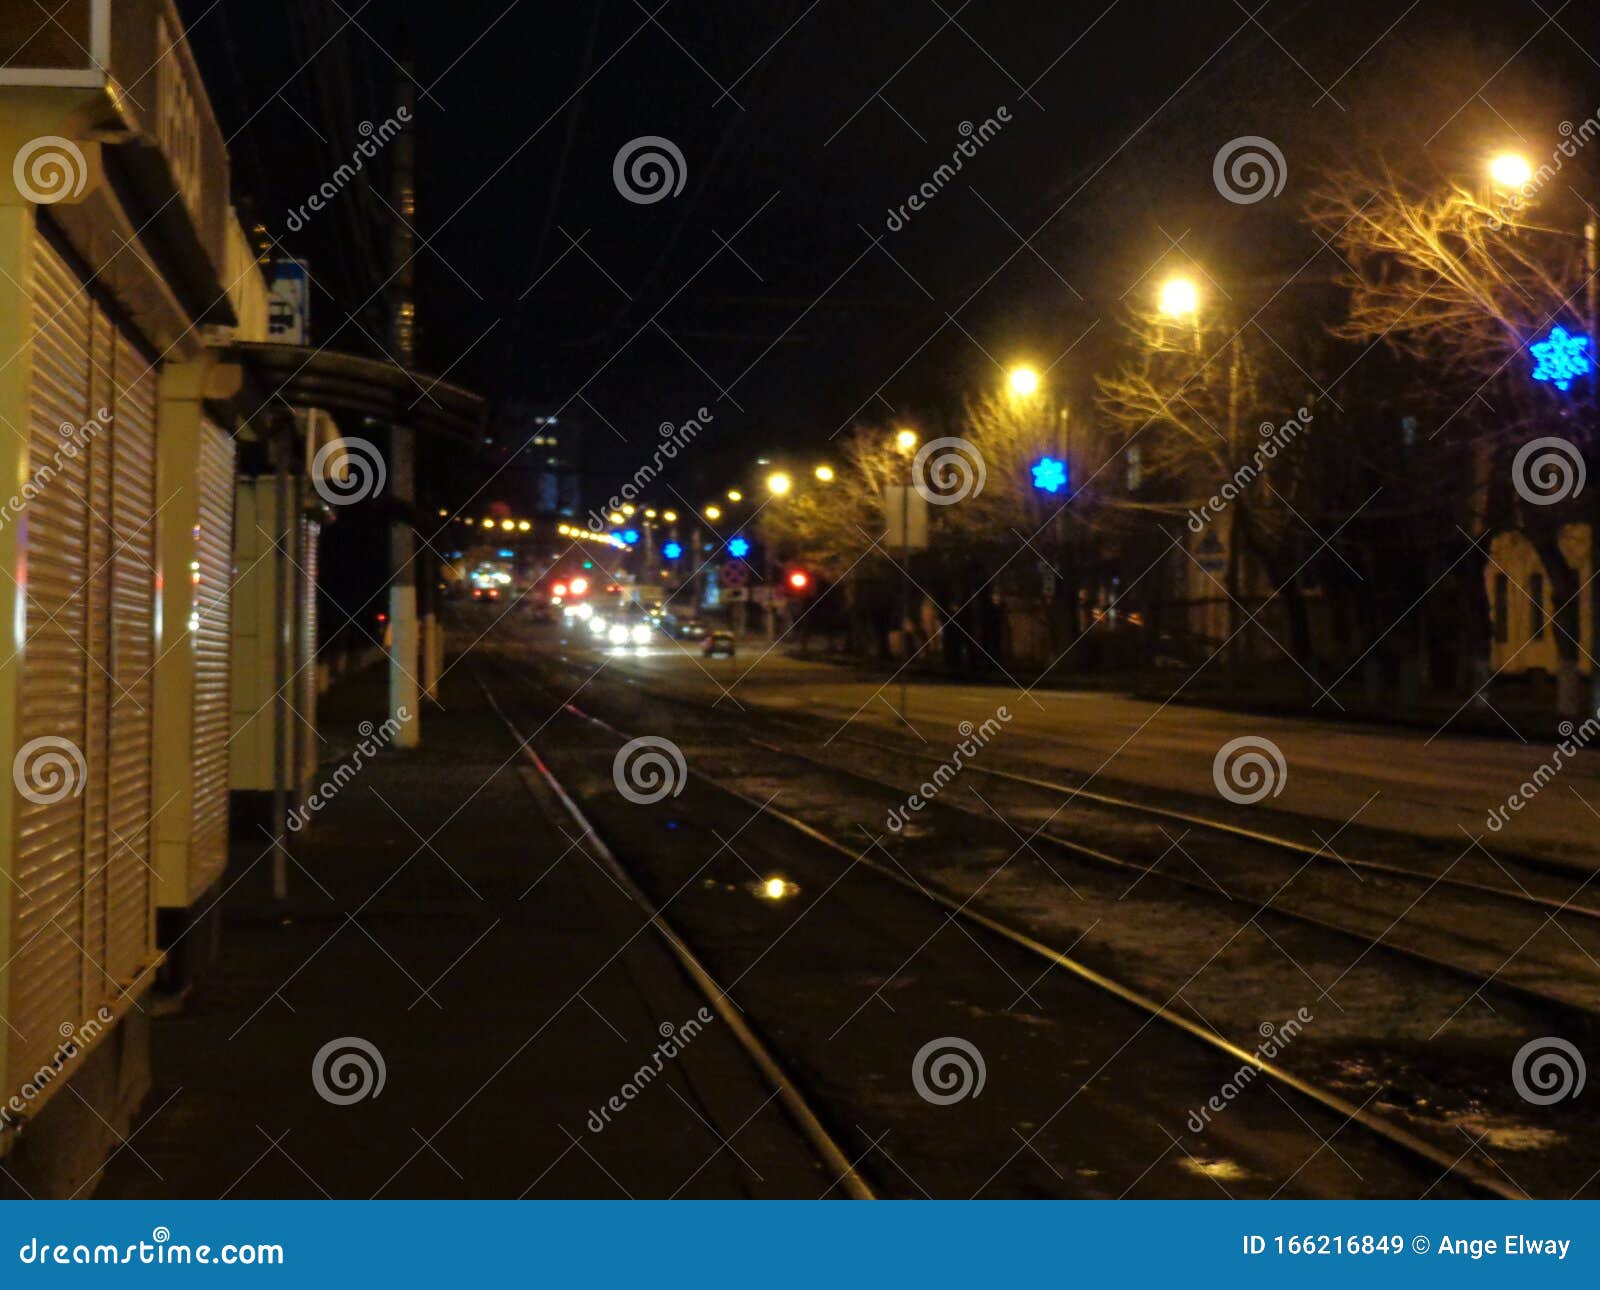 night landscpe with tram railway.